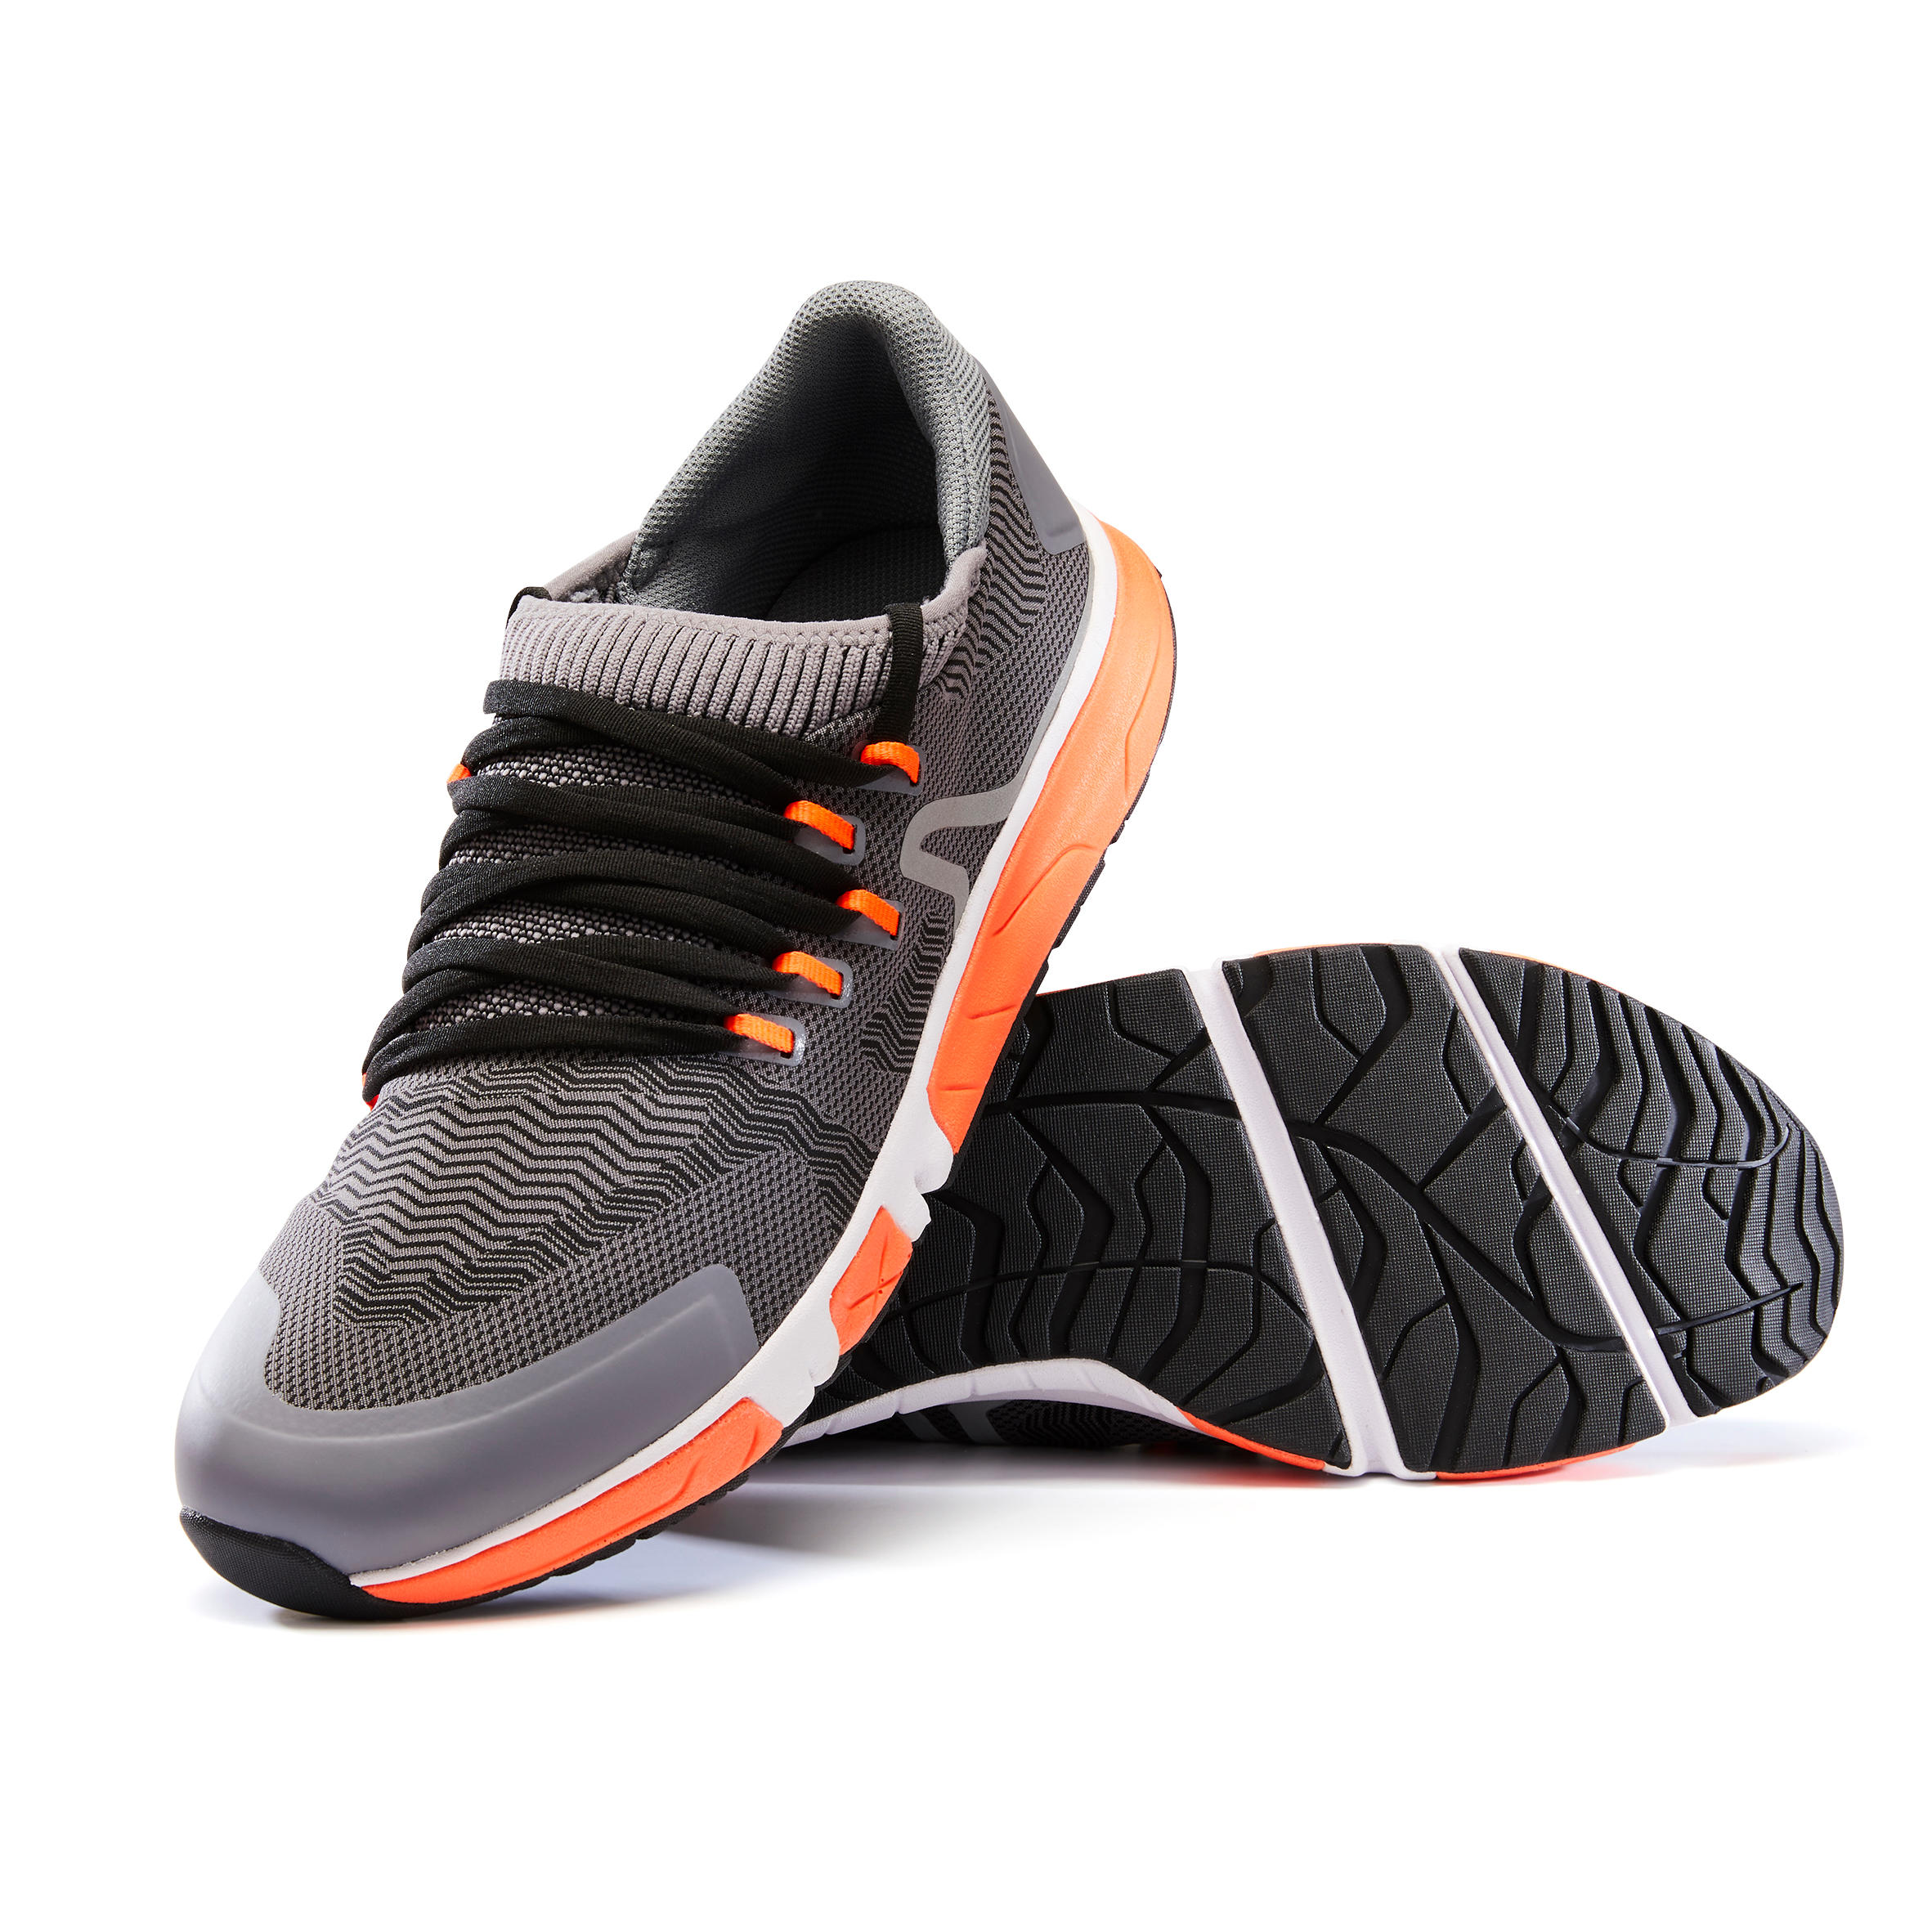 RW 900 long-distance fitness walking shoes - grey/orange 10/12